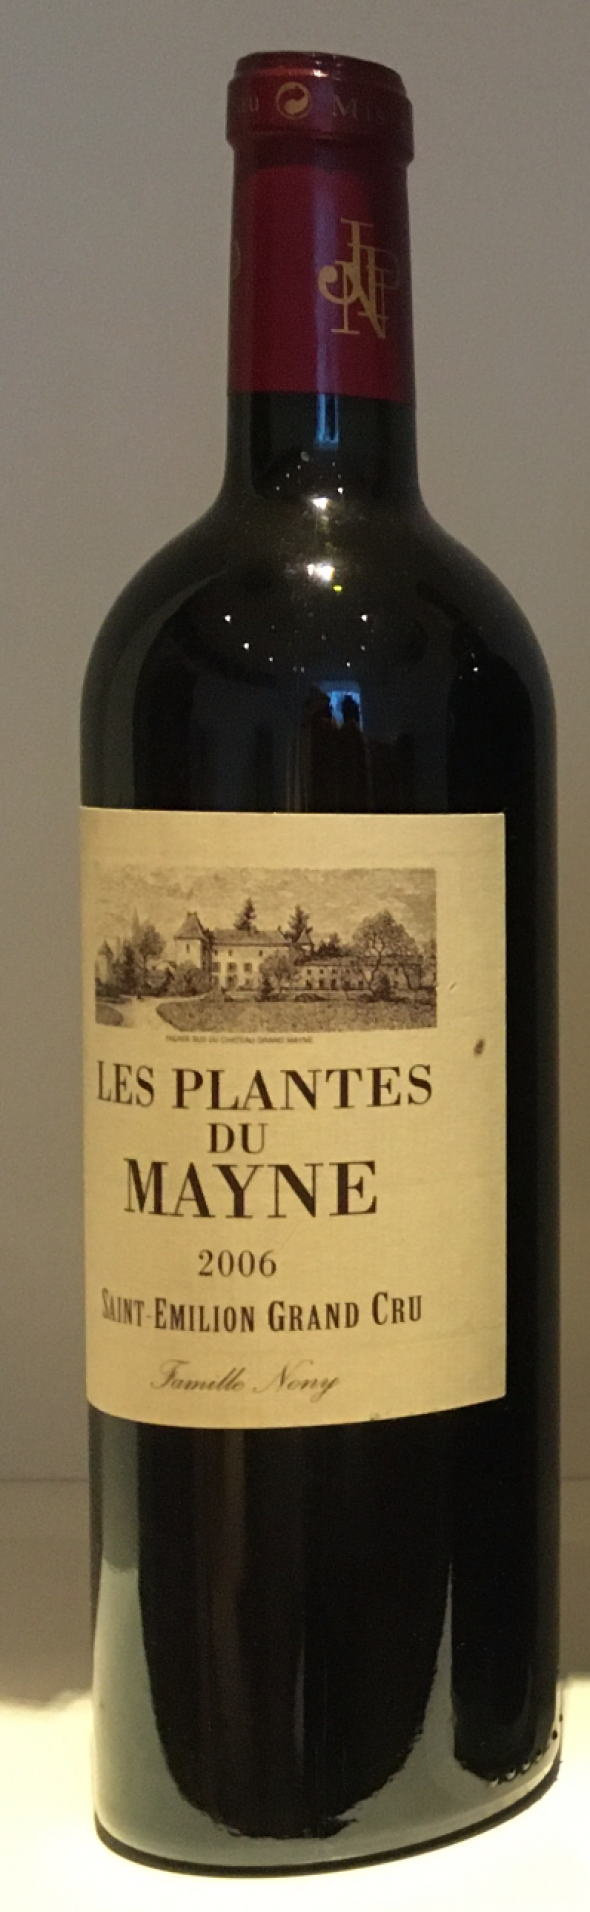 Plantes du Mayne, Bordeaux, Saint Emilion, France, AOC, Grand Cru